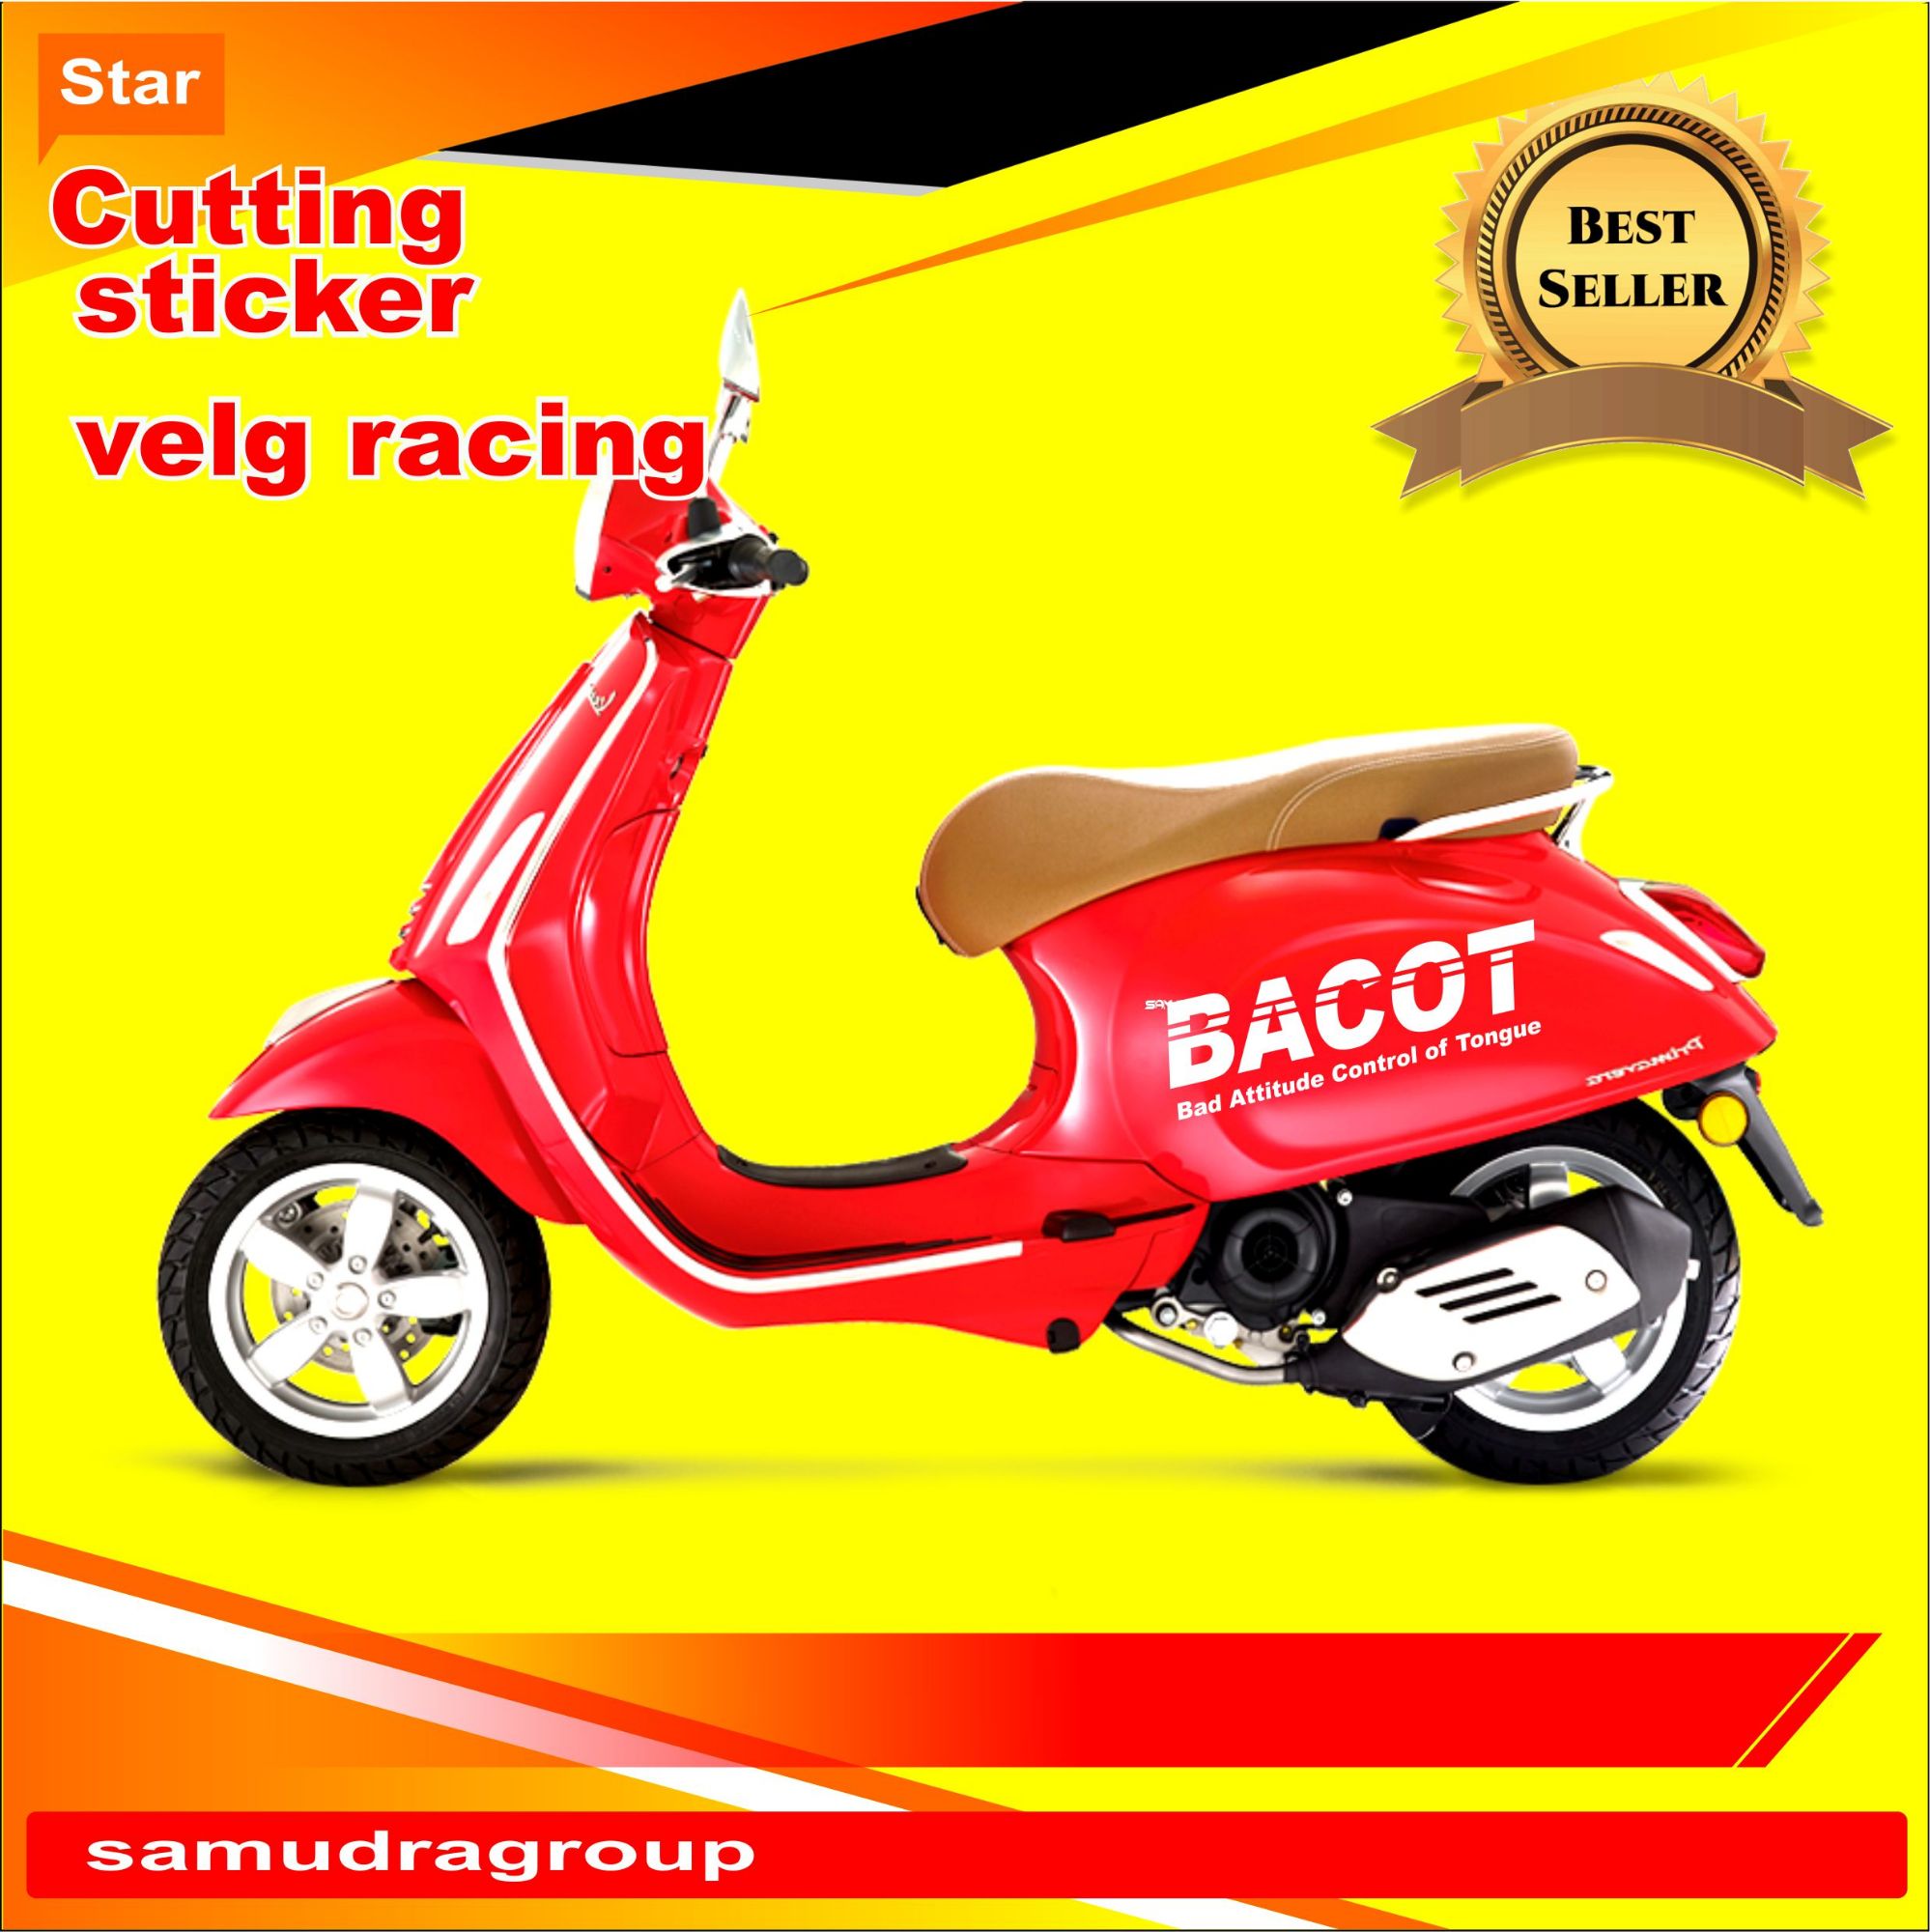 Stiker Cutting Motor BACOT Untuk Vespa Piaggio Scoopy Beat Mio Dan Matic Lainnya Lazada Indonesia